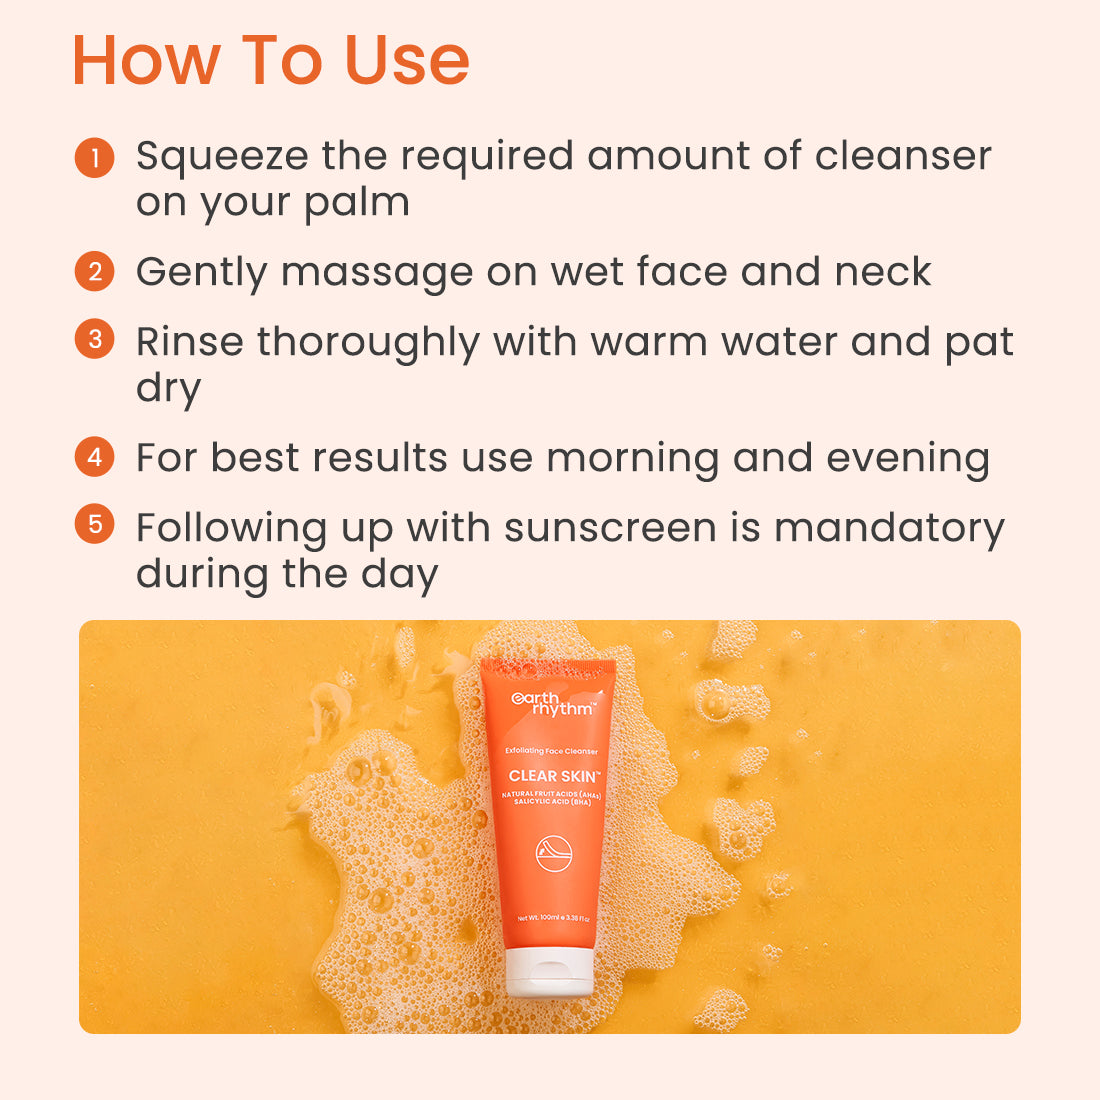 How to use aha bha face wash